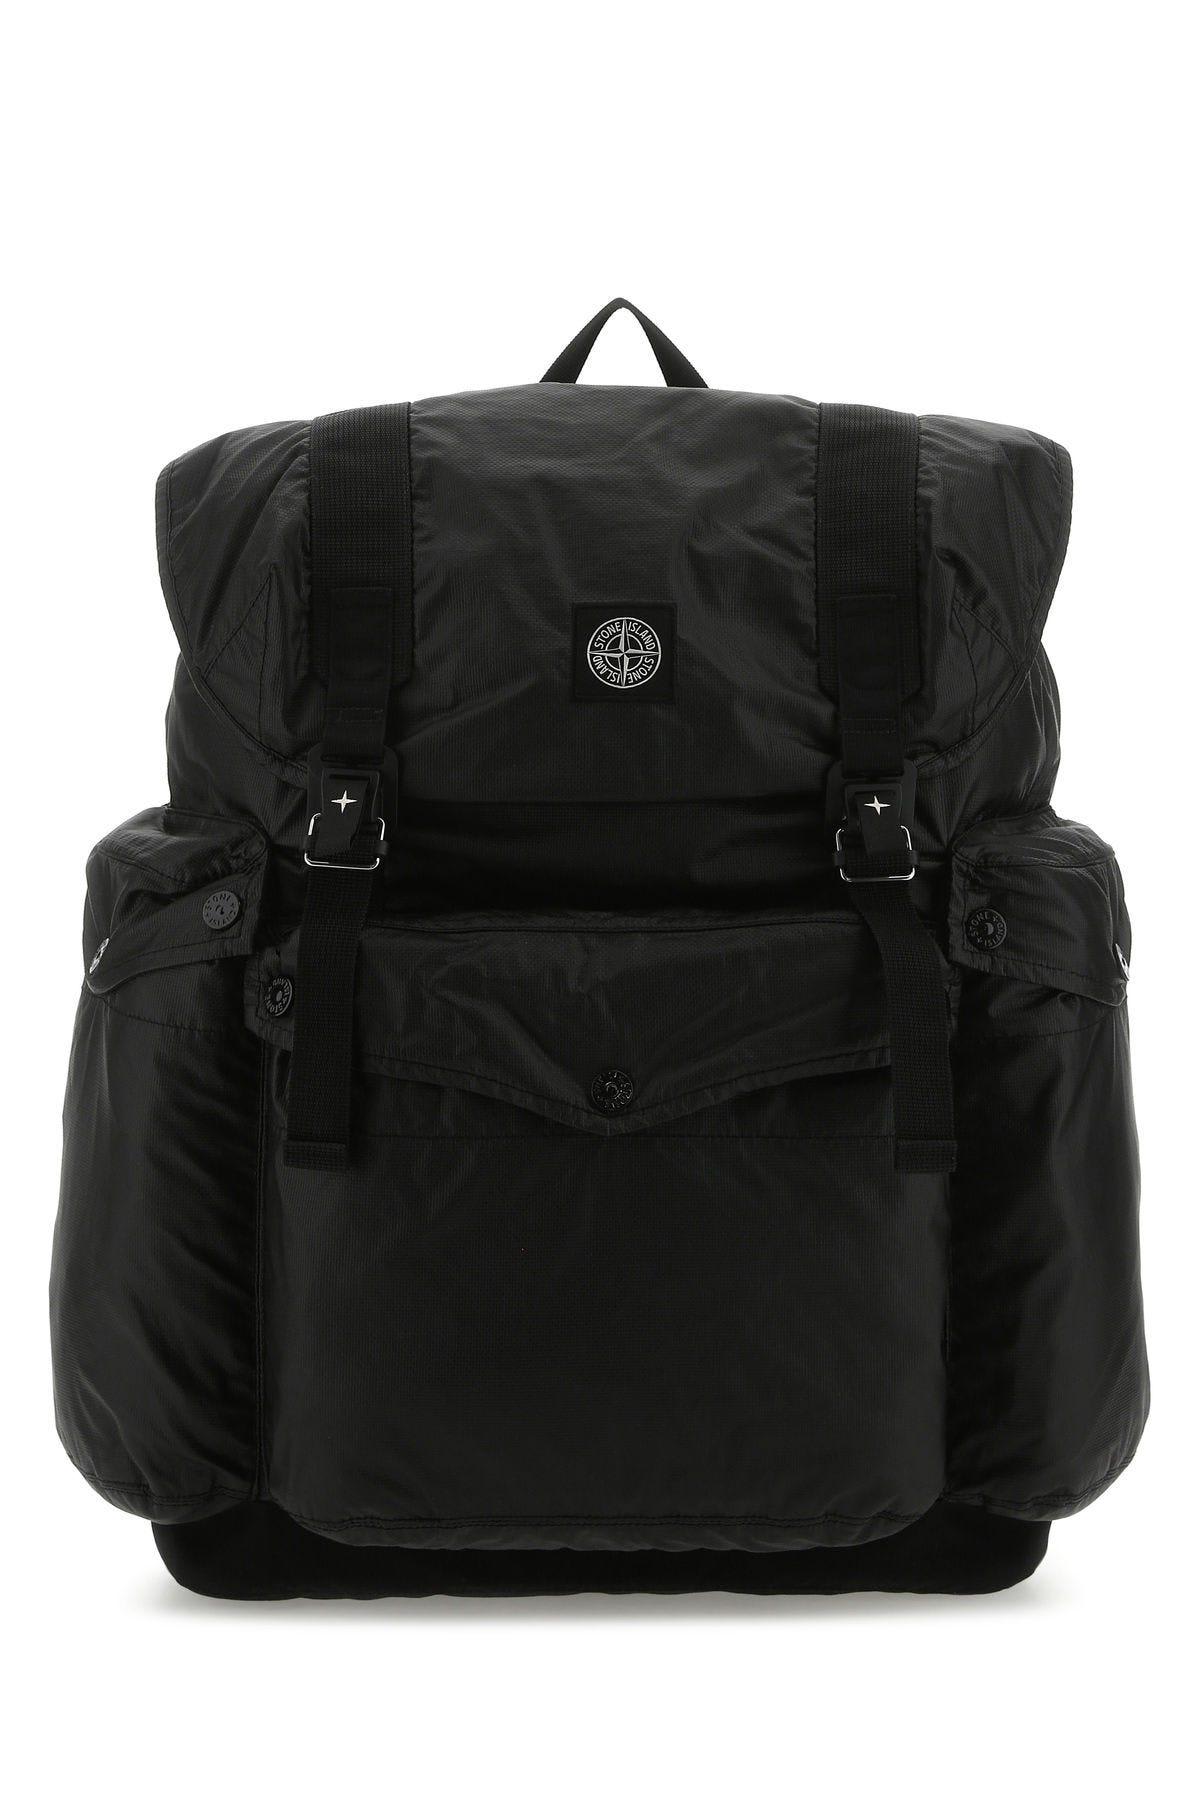 Stone Island Black Cotton And Nylon Backpack